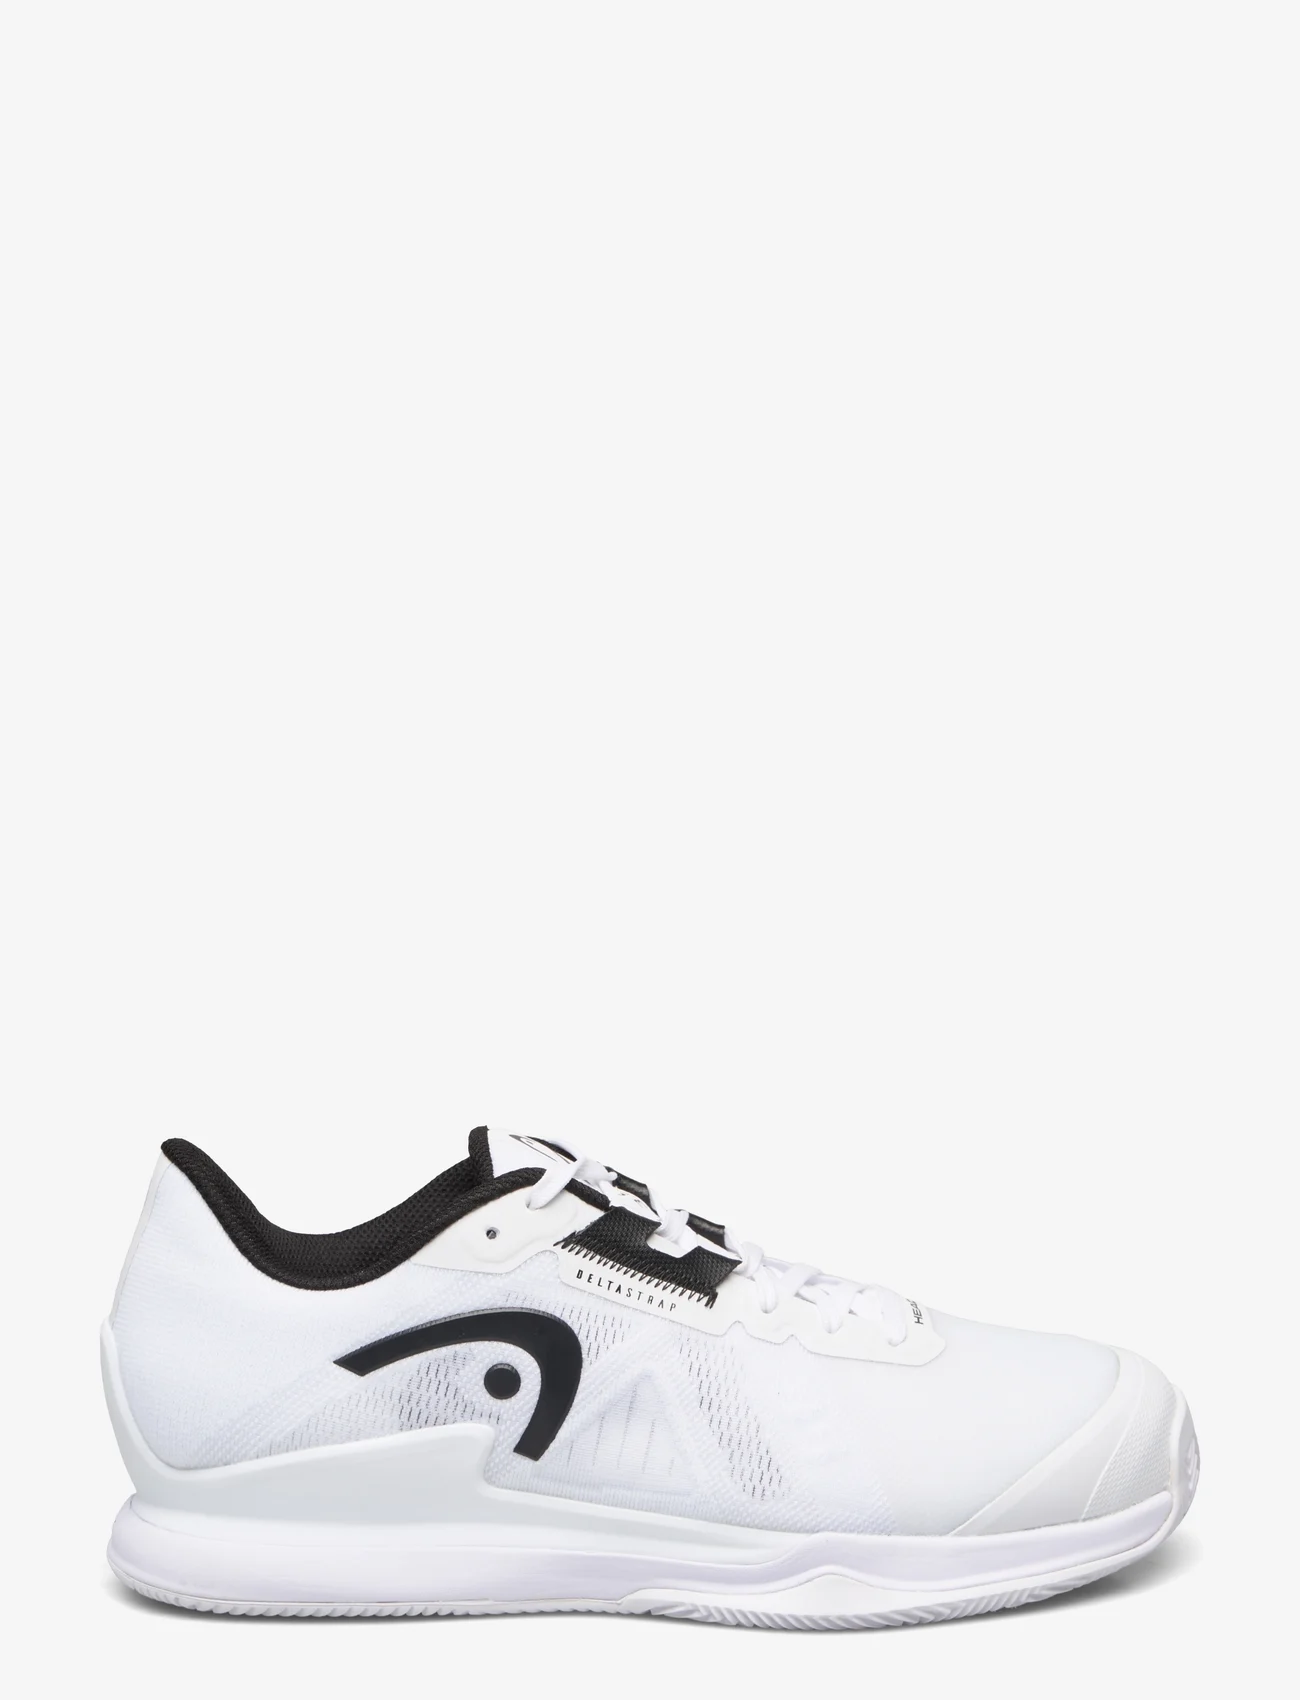 Head - HEAD Sprint Pro 3.5 Clay Mnner Tennisschuhe - racketsports shoes - white/black - 1